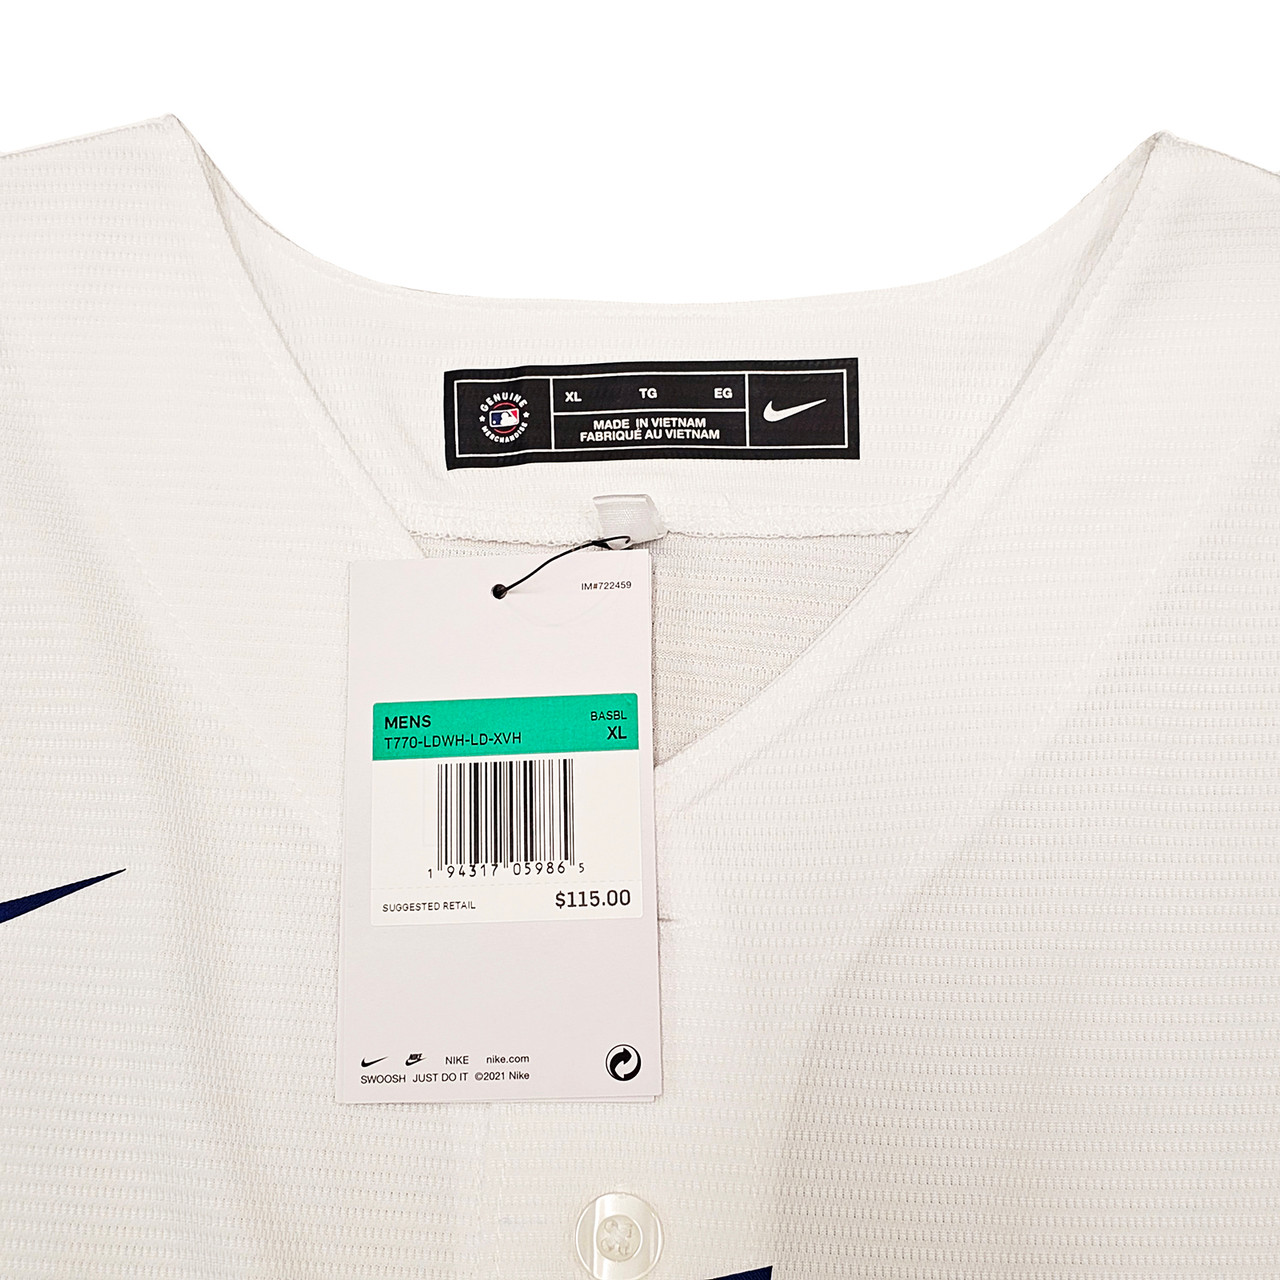 Tampa Bay Rays Wander Franco Autographed White Nike Jersey Size XL JSA  Stock #218683